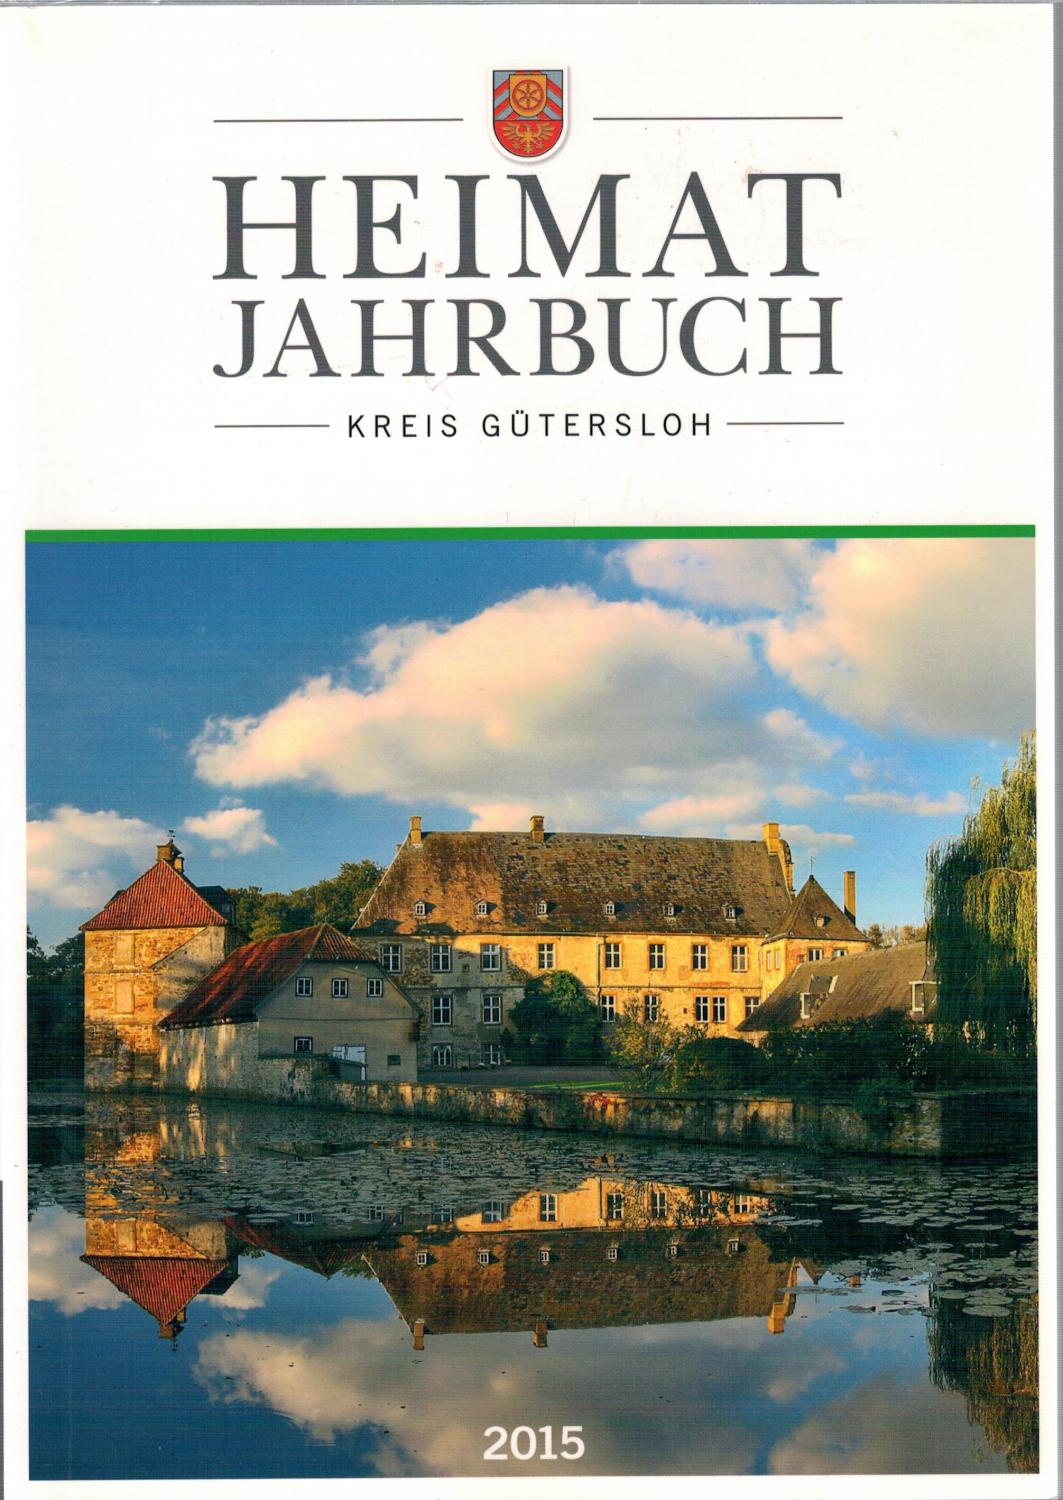 Heimatjahrbuch - Kreis Gütersloh 2015 - Kreis Gütersloh (Hrsg.)